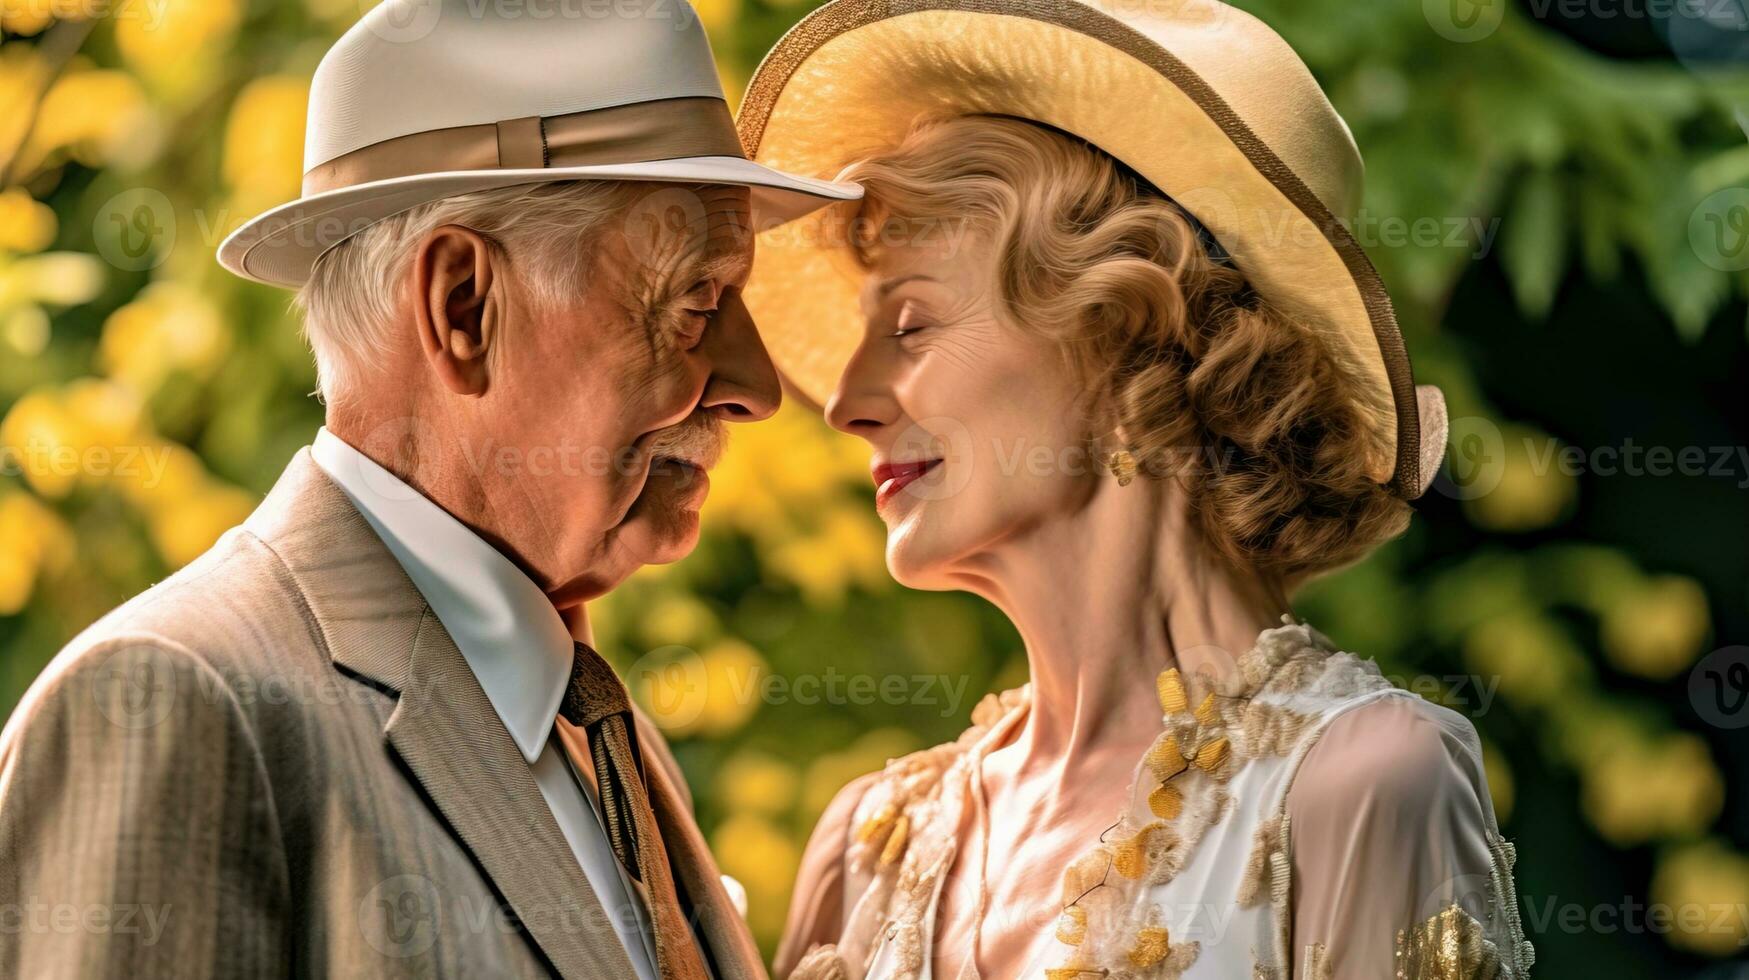 AI generated Elderly couple in elegant attire, sharing a heartfelt kiss in a lush garden setting. Generative AI photo